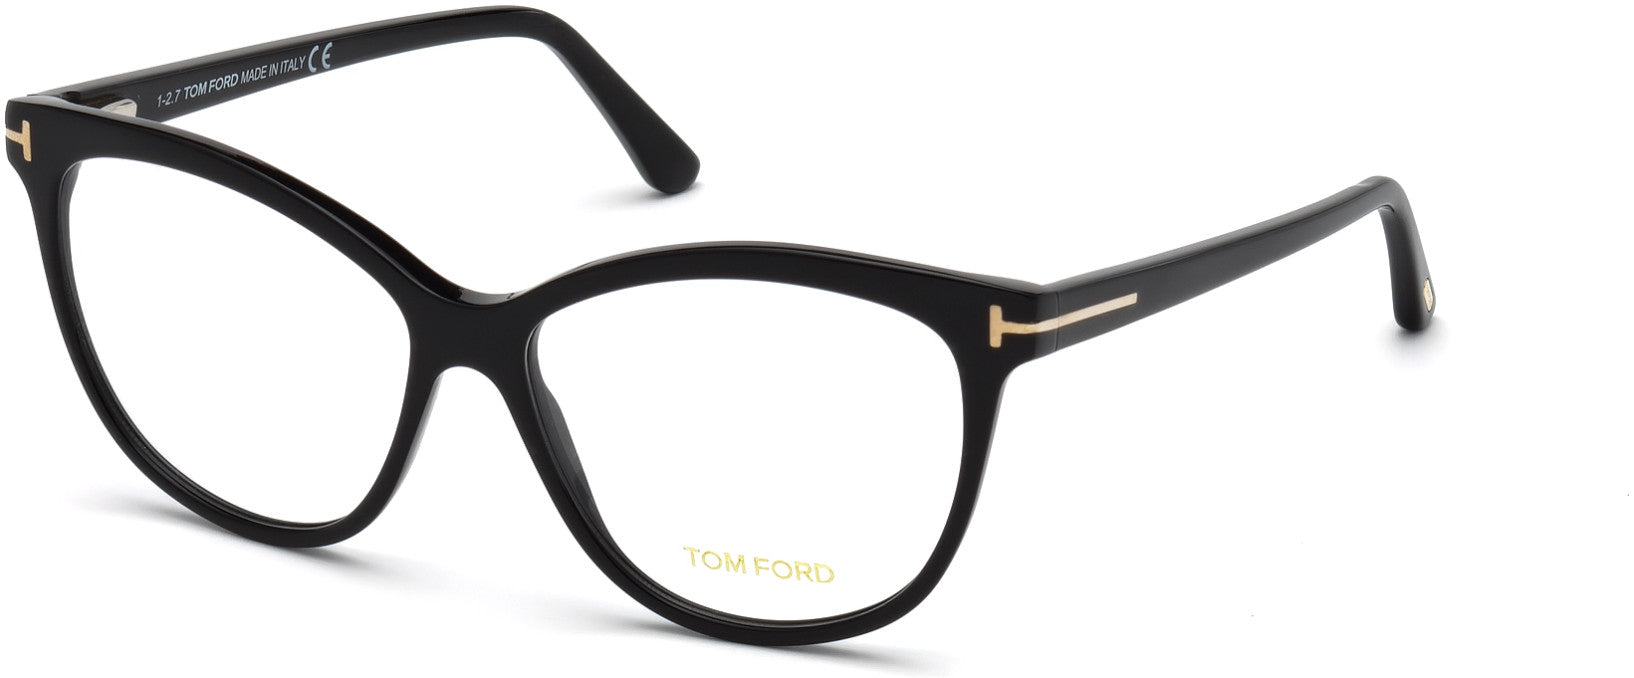 Tom Ford FT5511 Butterfly Eyeglasses 001-001 - Shiny Black